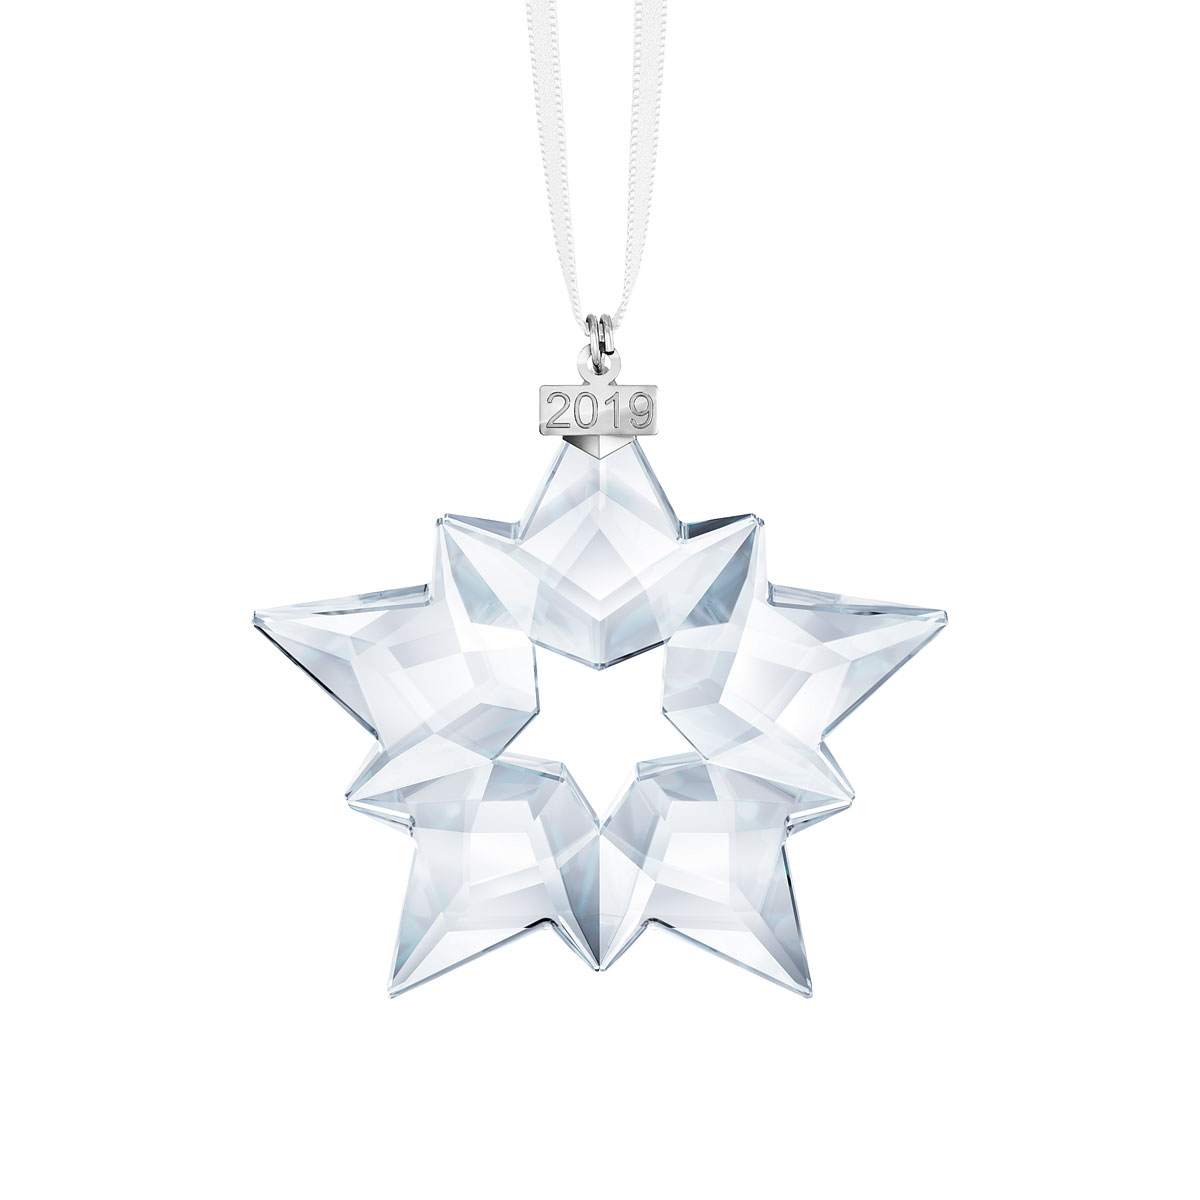 Swarovski Crystal Annual Edition 2019 Christmas Ornament Star